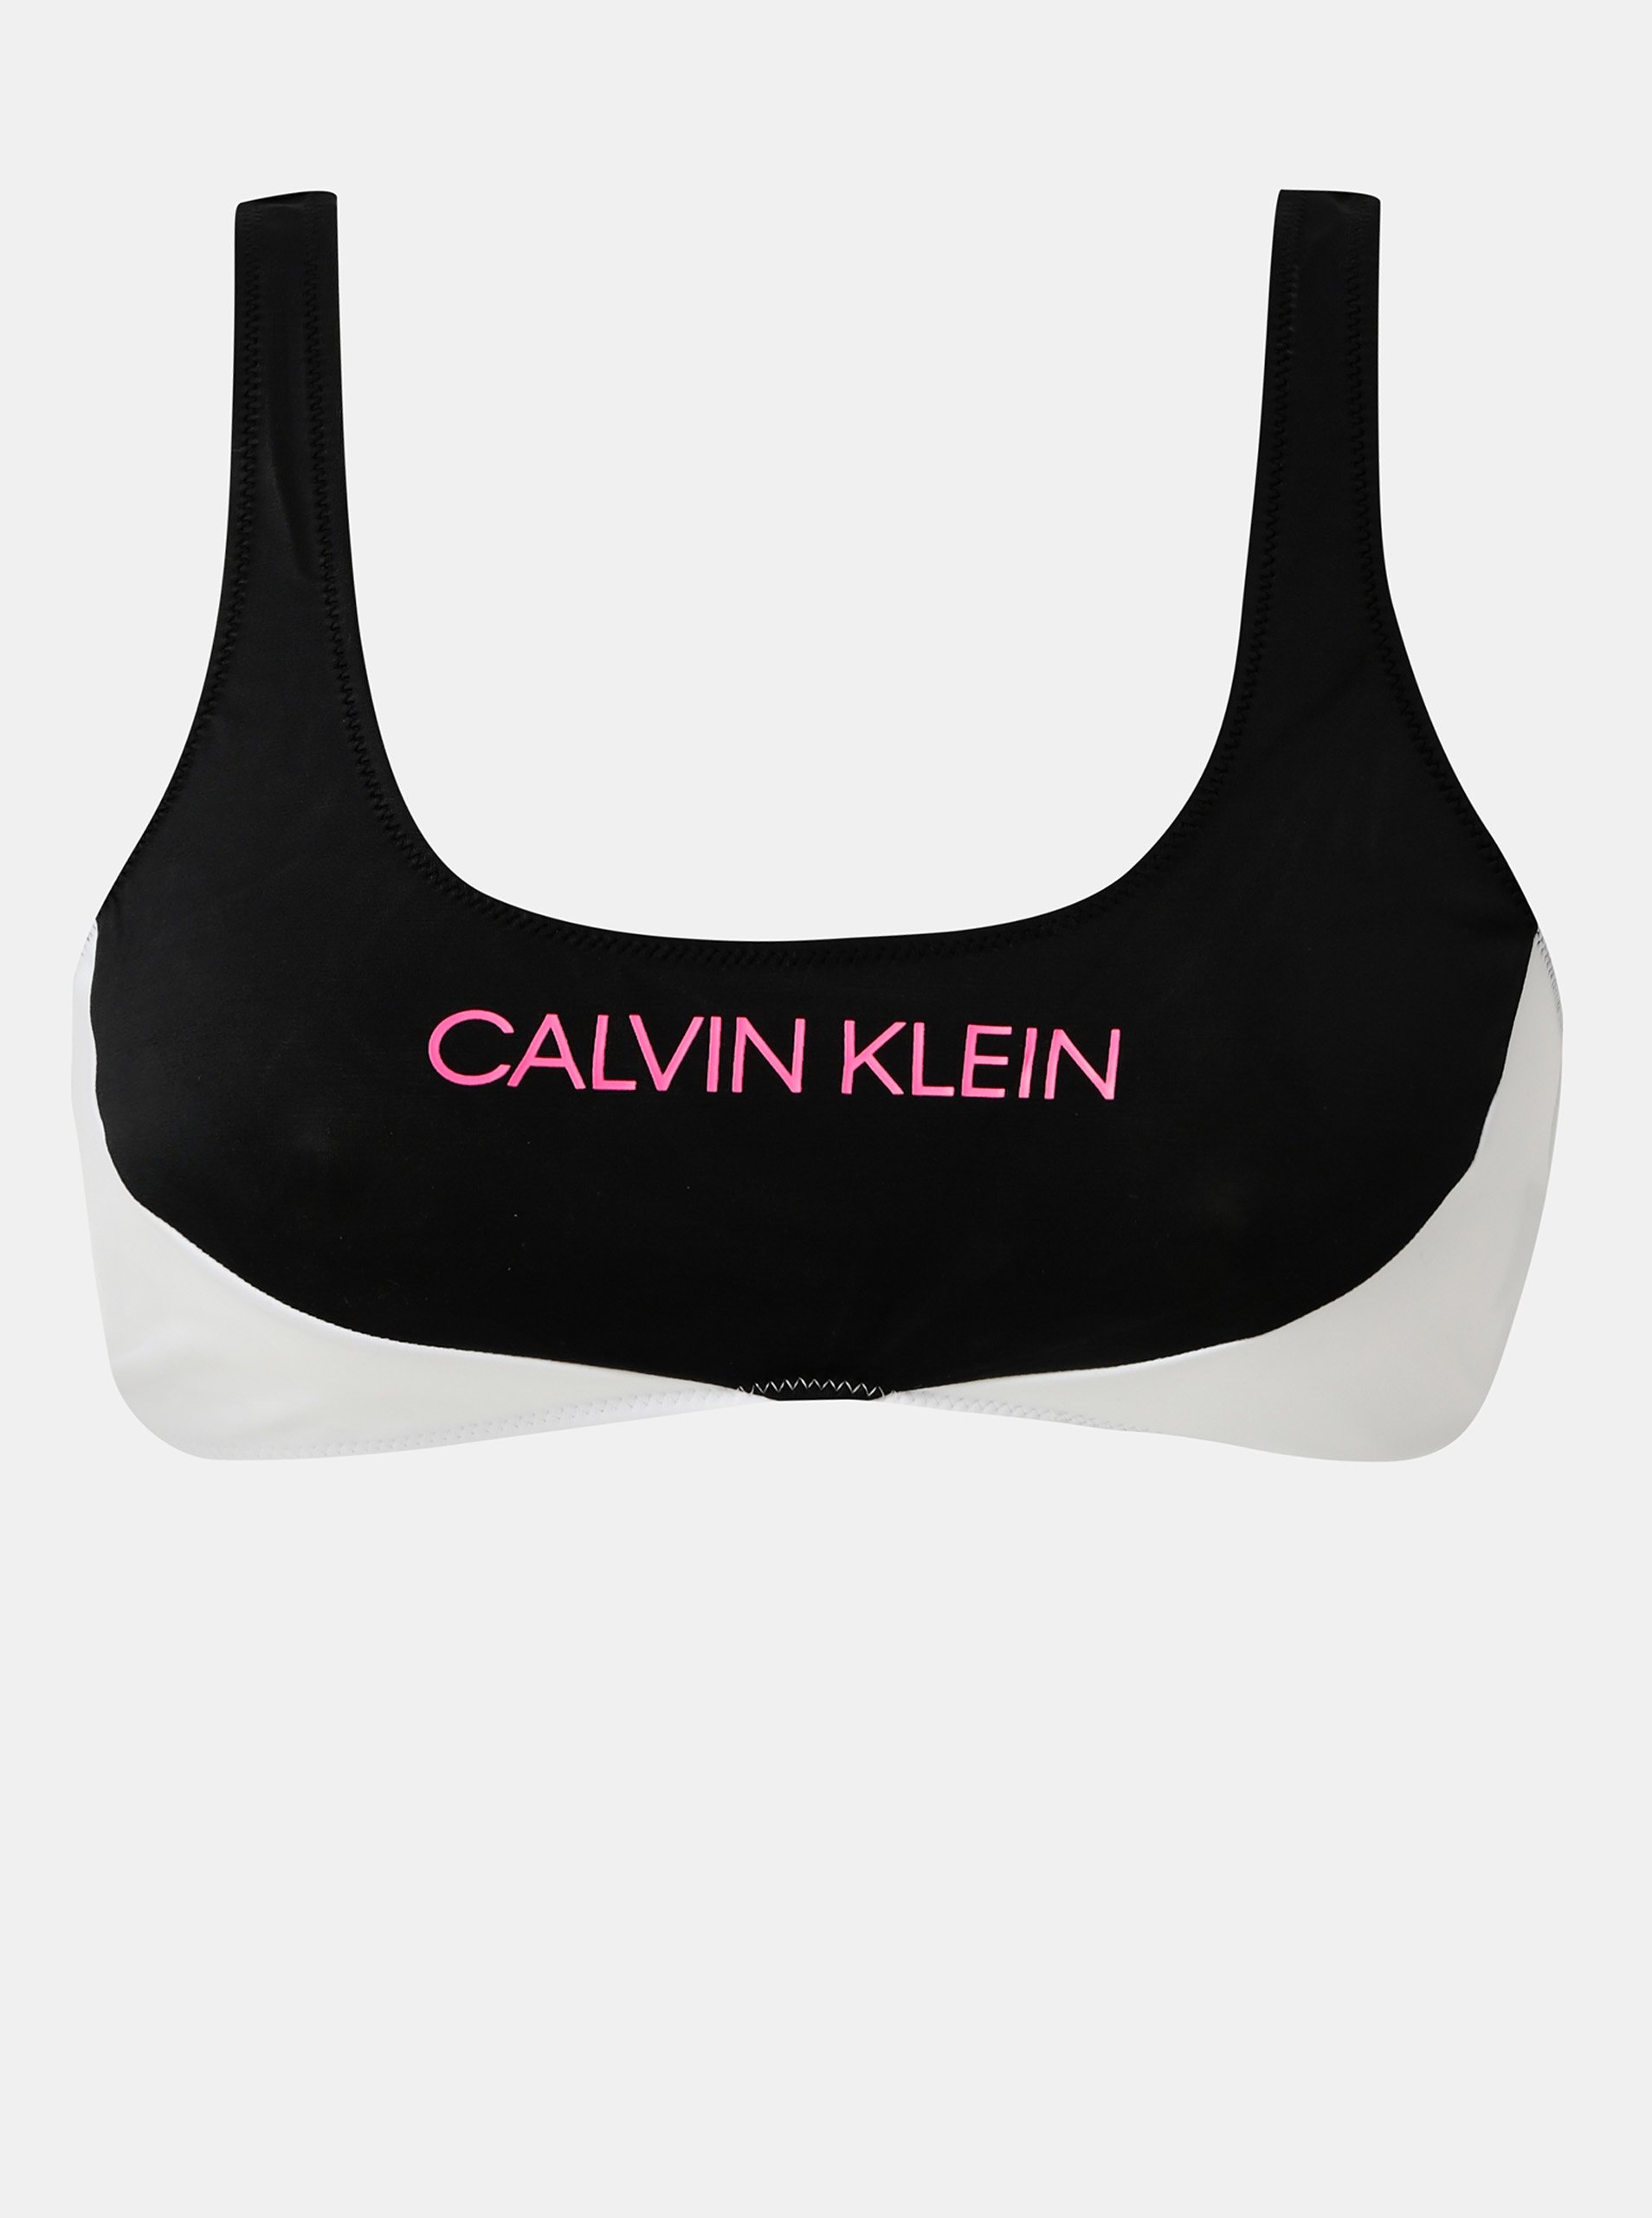 Lacno Bielo-čierny horný diel plaviek Calvin Klein Underwear